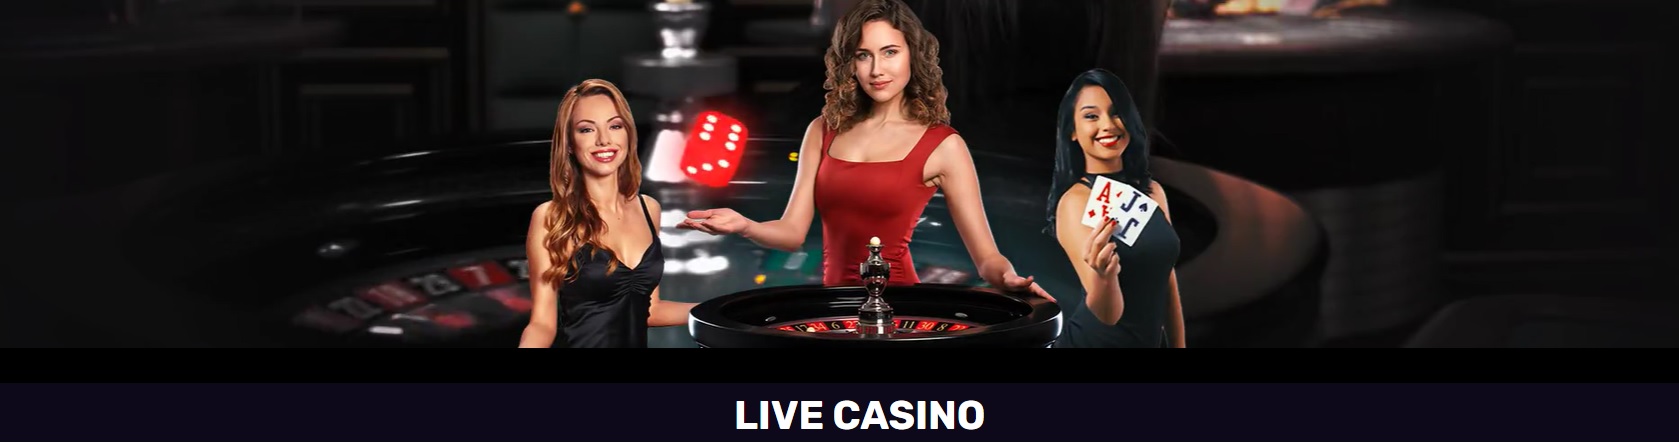 Playamo live casino